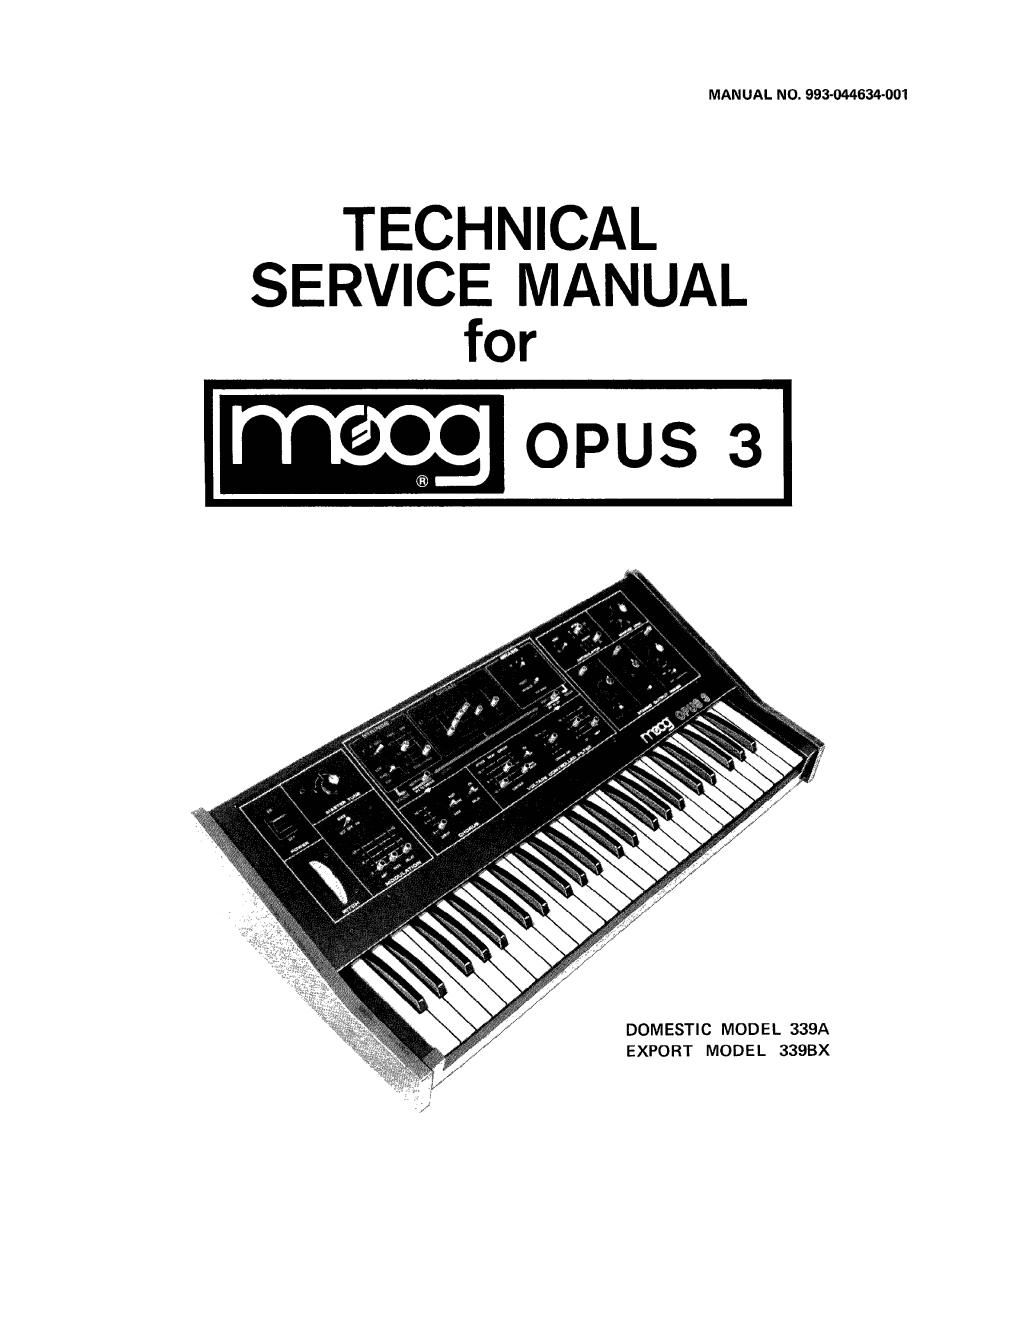 moog opus 3 service manual